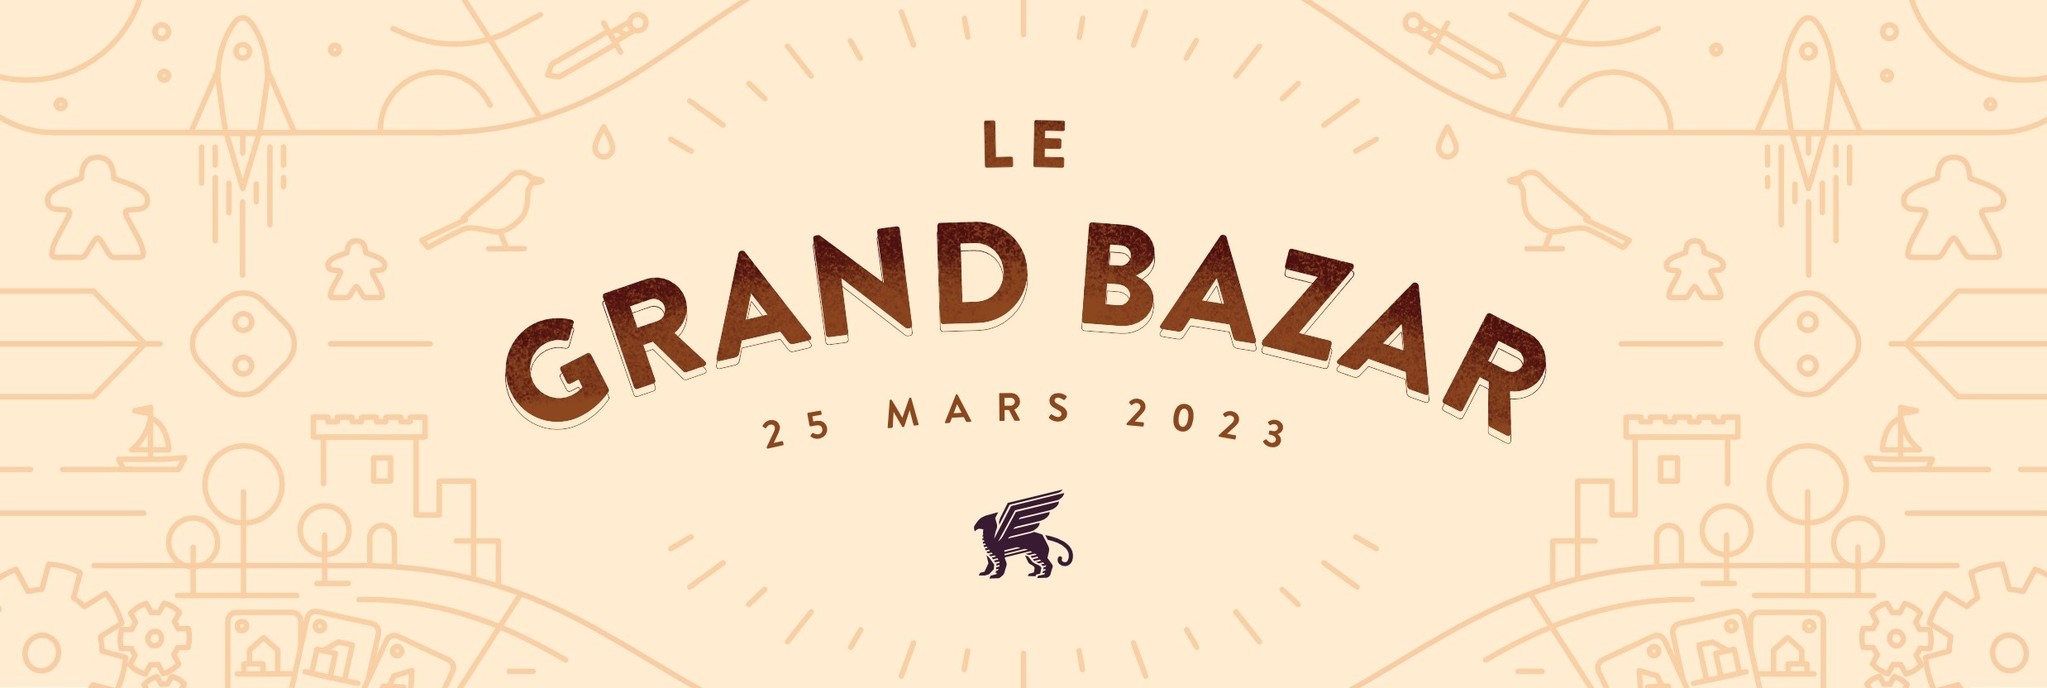 Le Grand Bazar édition mars 2023